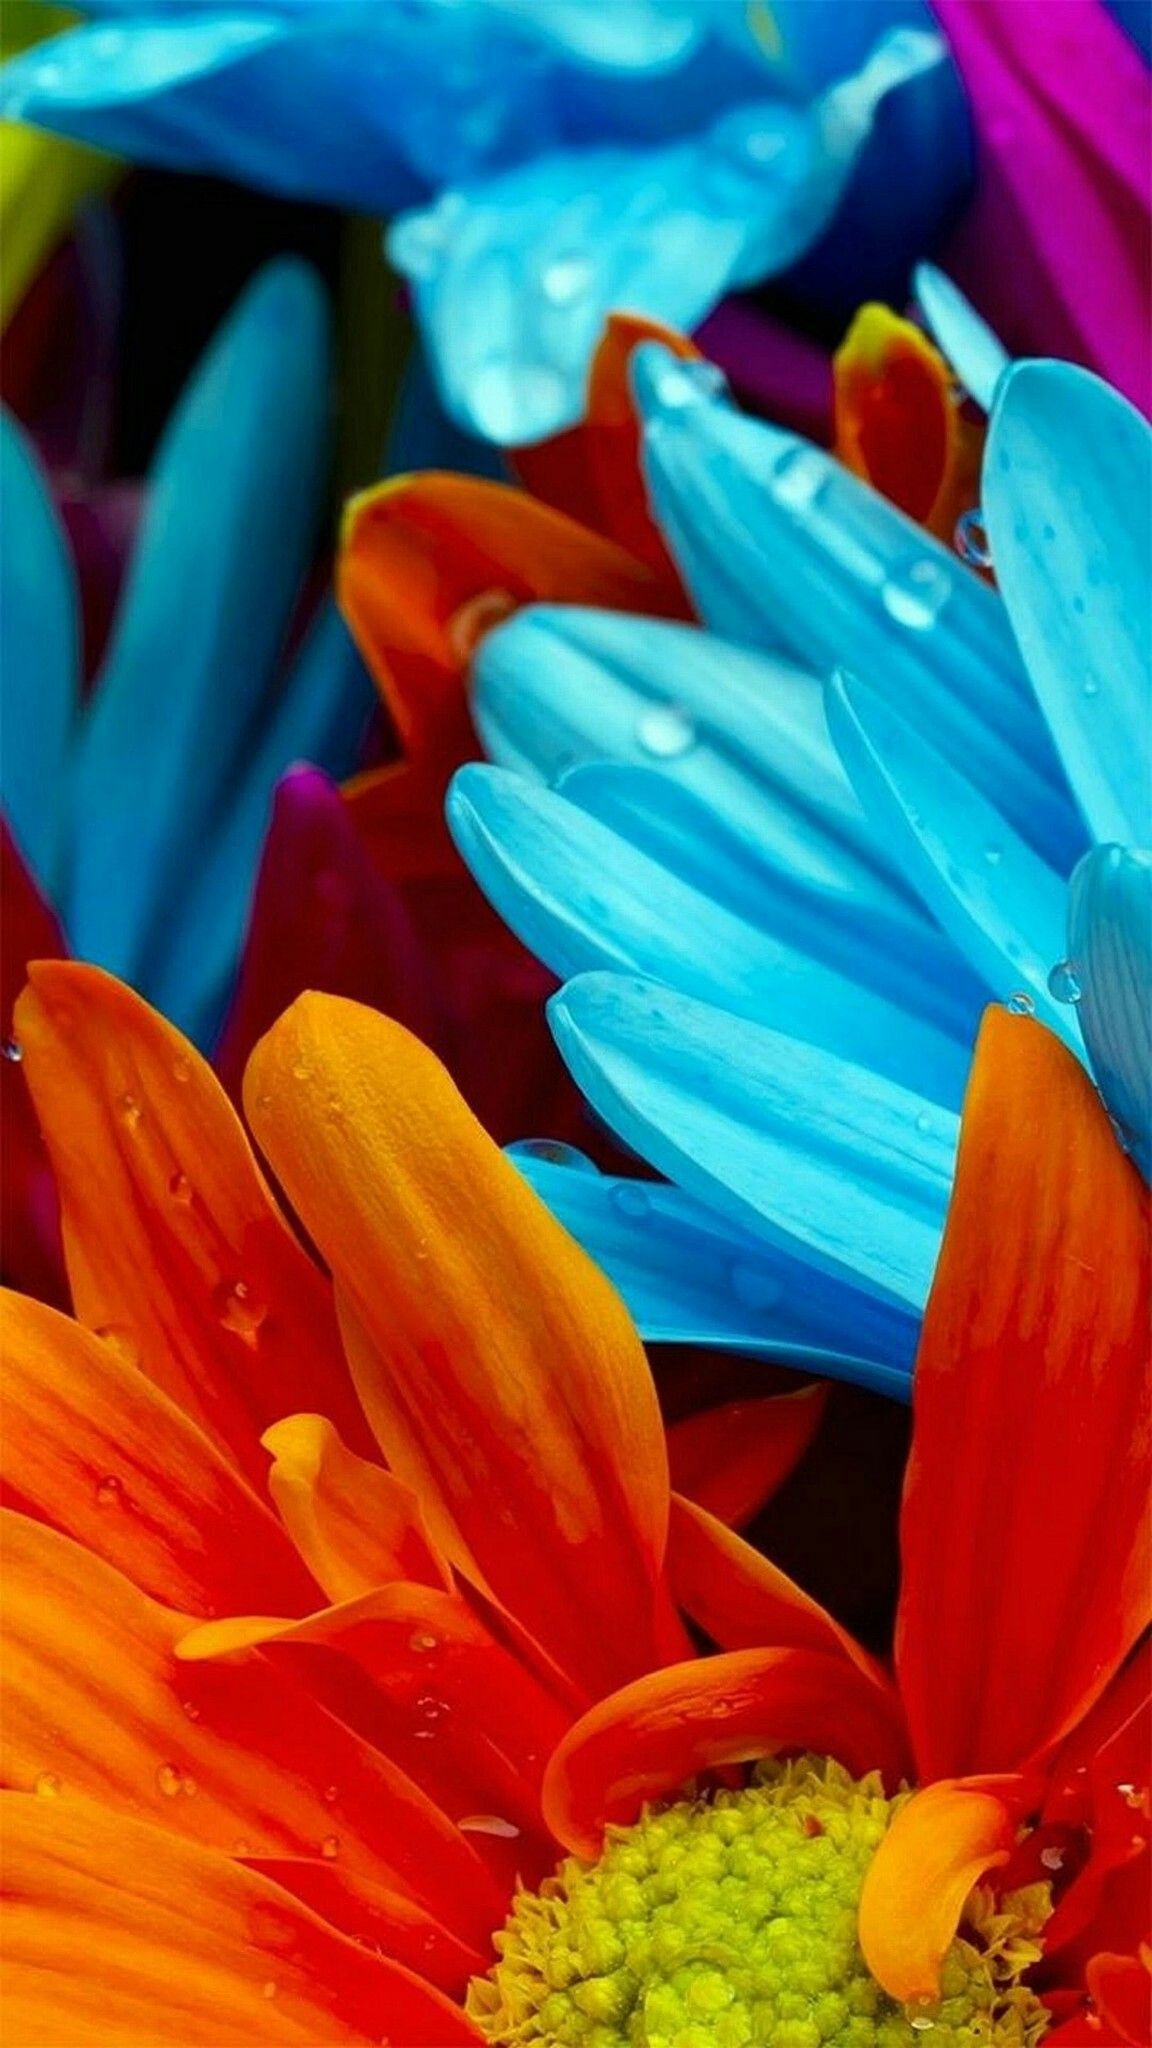 Colorful Flowers Wallpaper. Full HD wallpaper download, Flowers, Wallpaper downloads